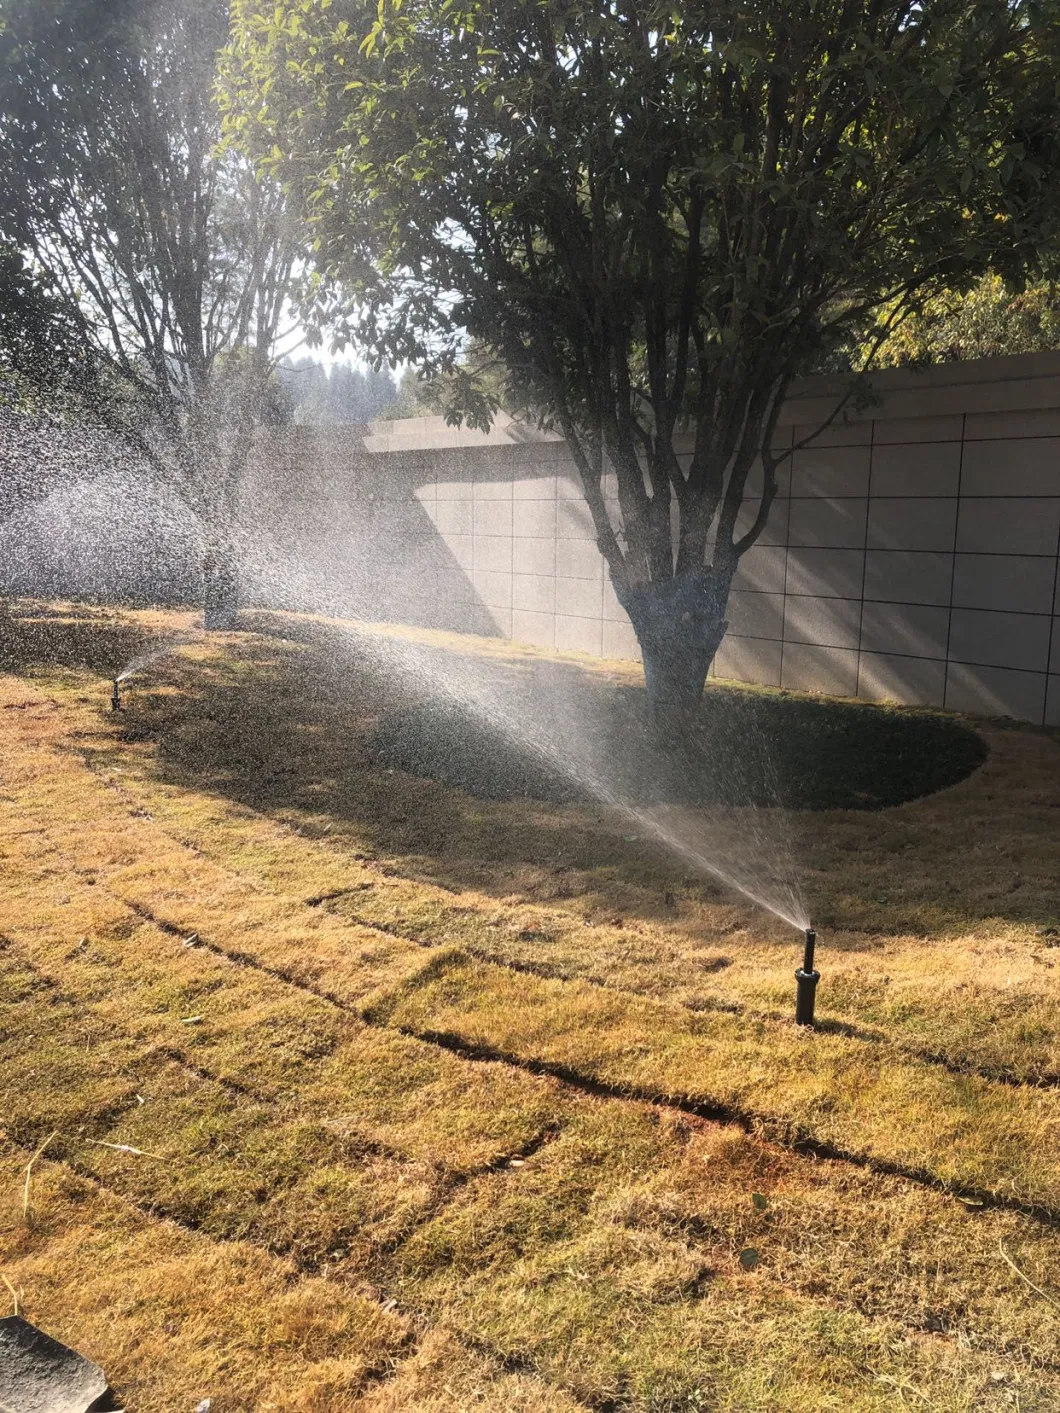 Pop up Sprinkler Irrigation Equipment Pot Flower Garden Sprinkler